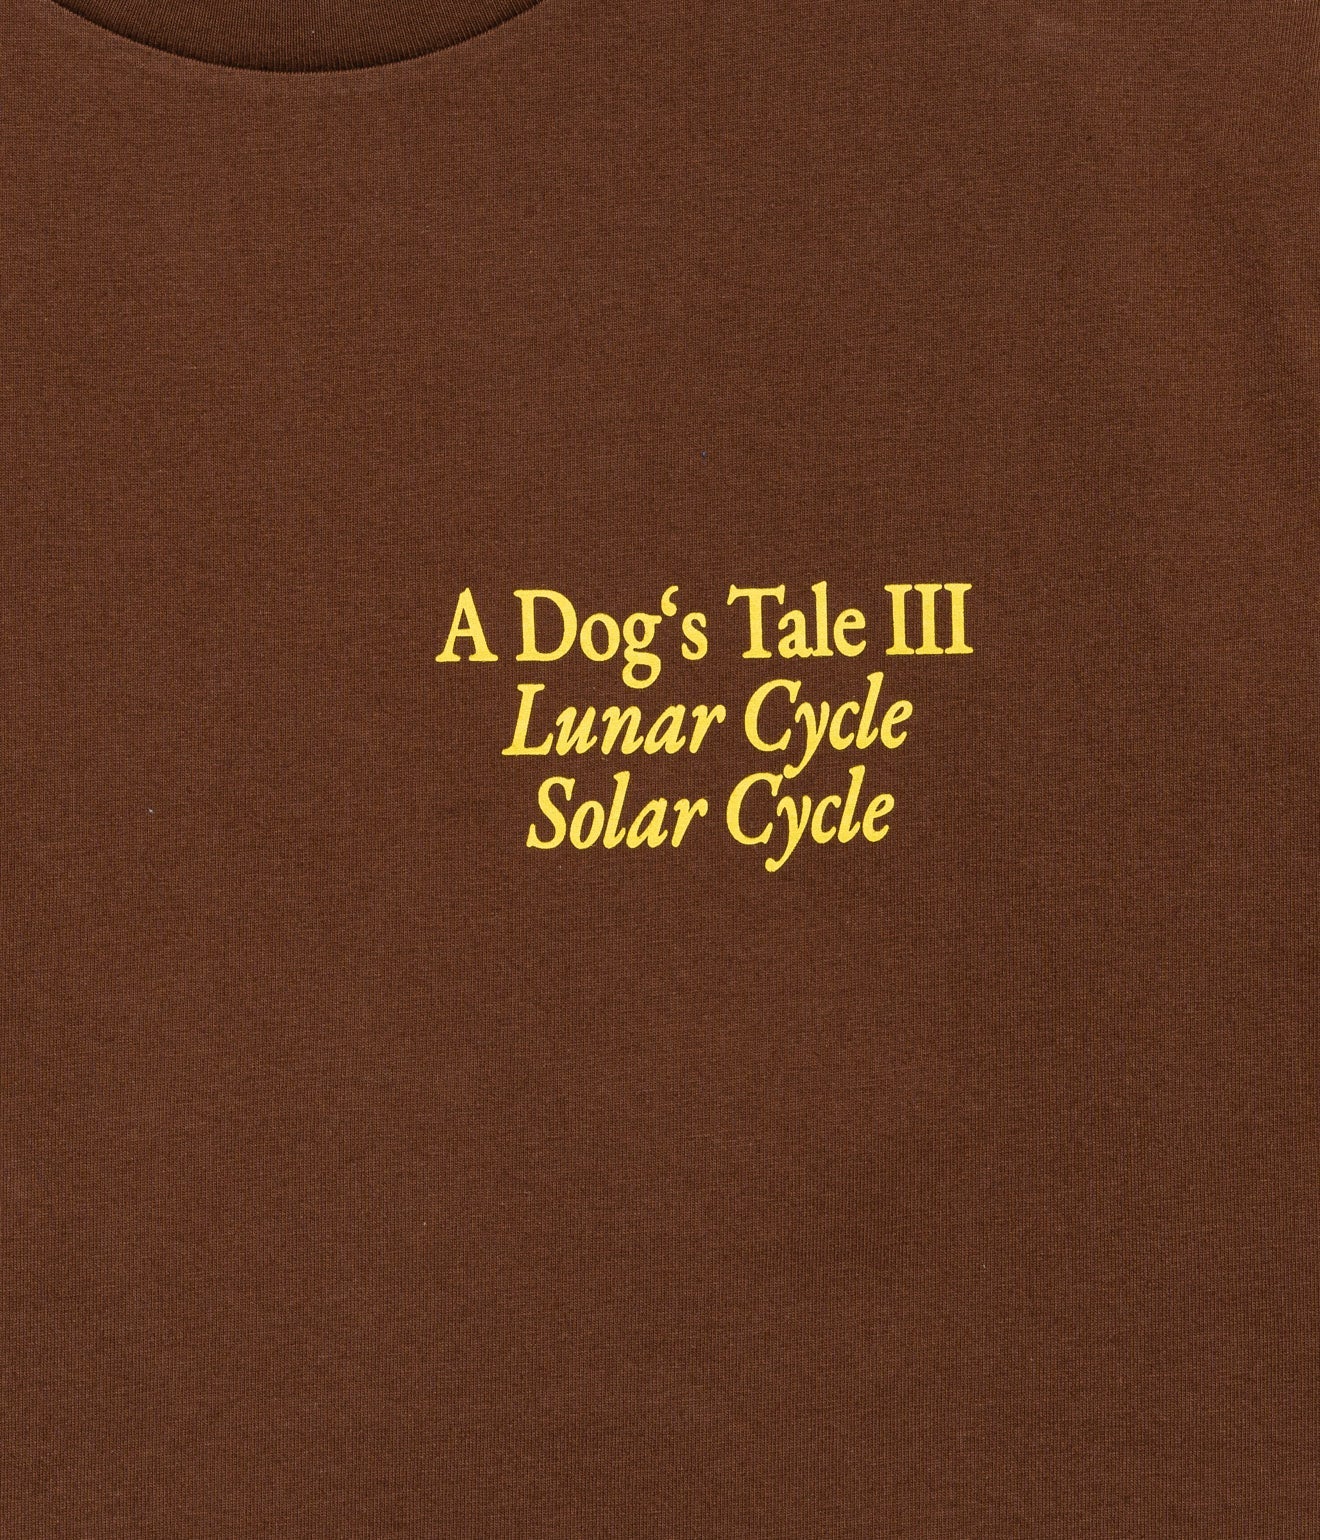 Public Possession "Lunar/Solar Dog" T-Shirt - WEAREALLANIMALS